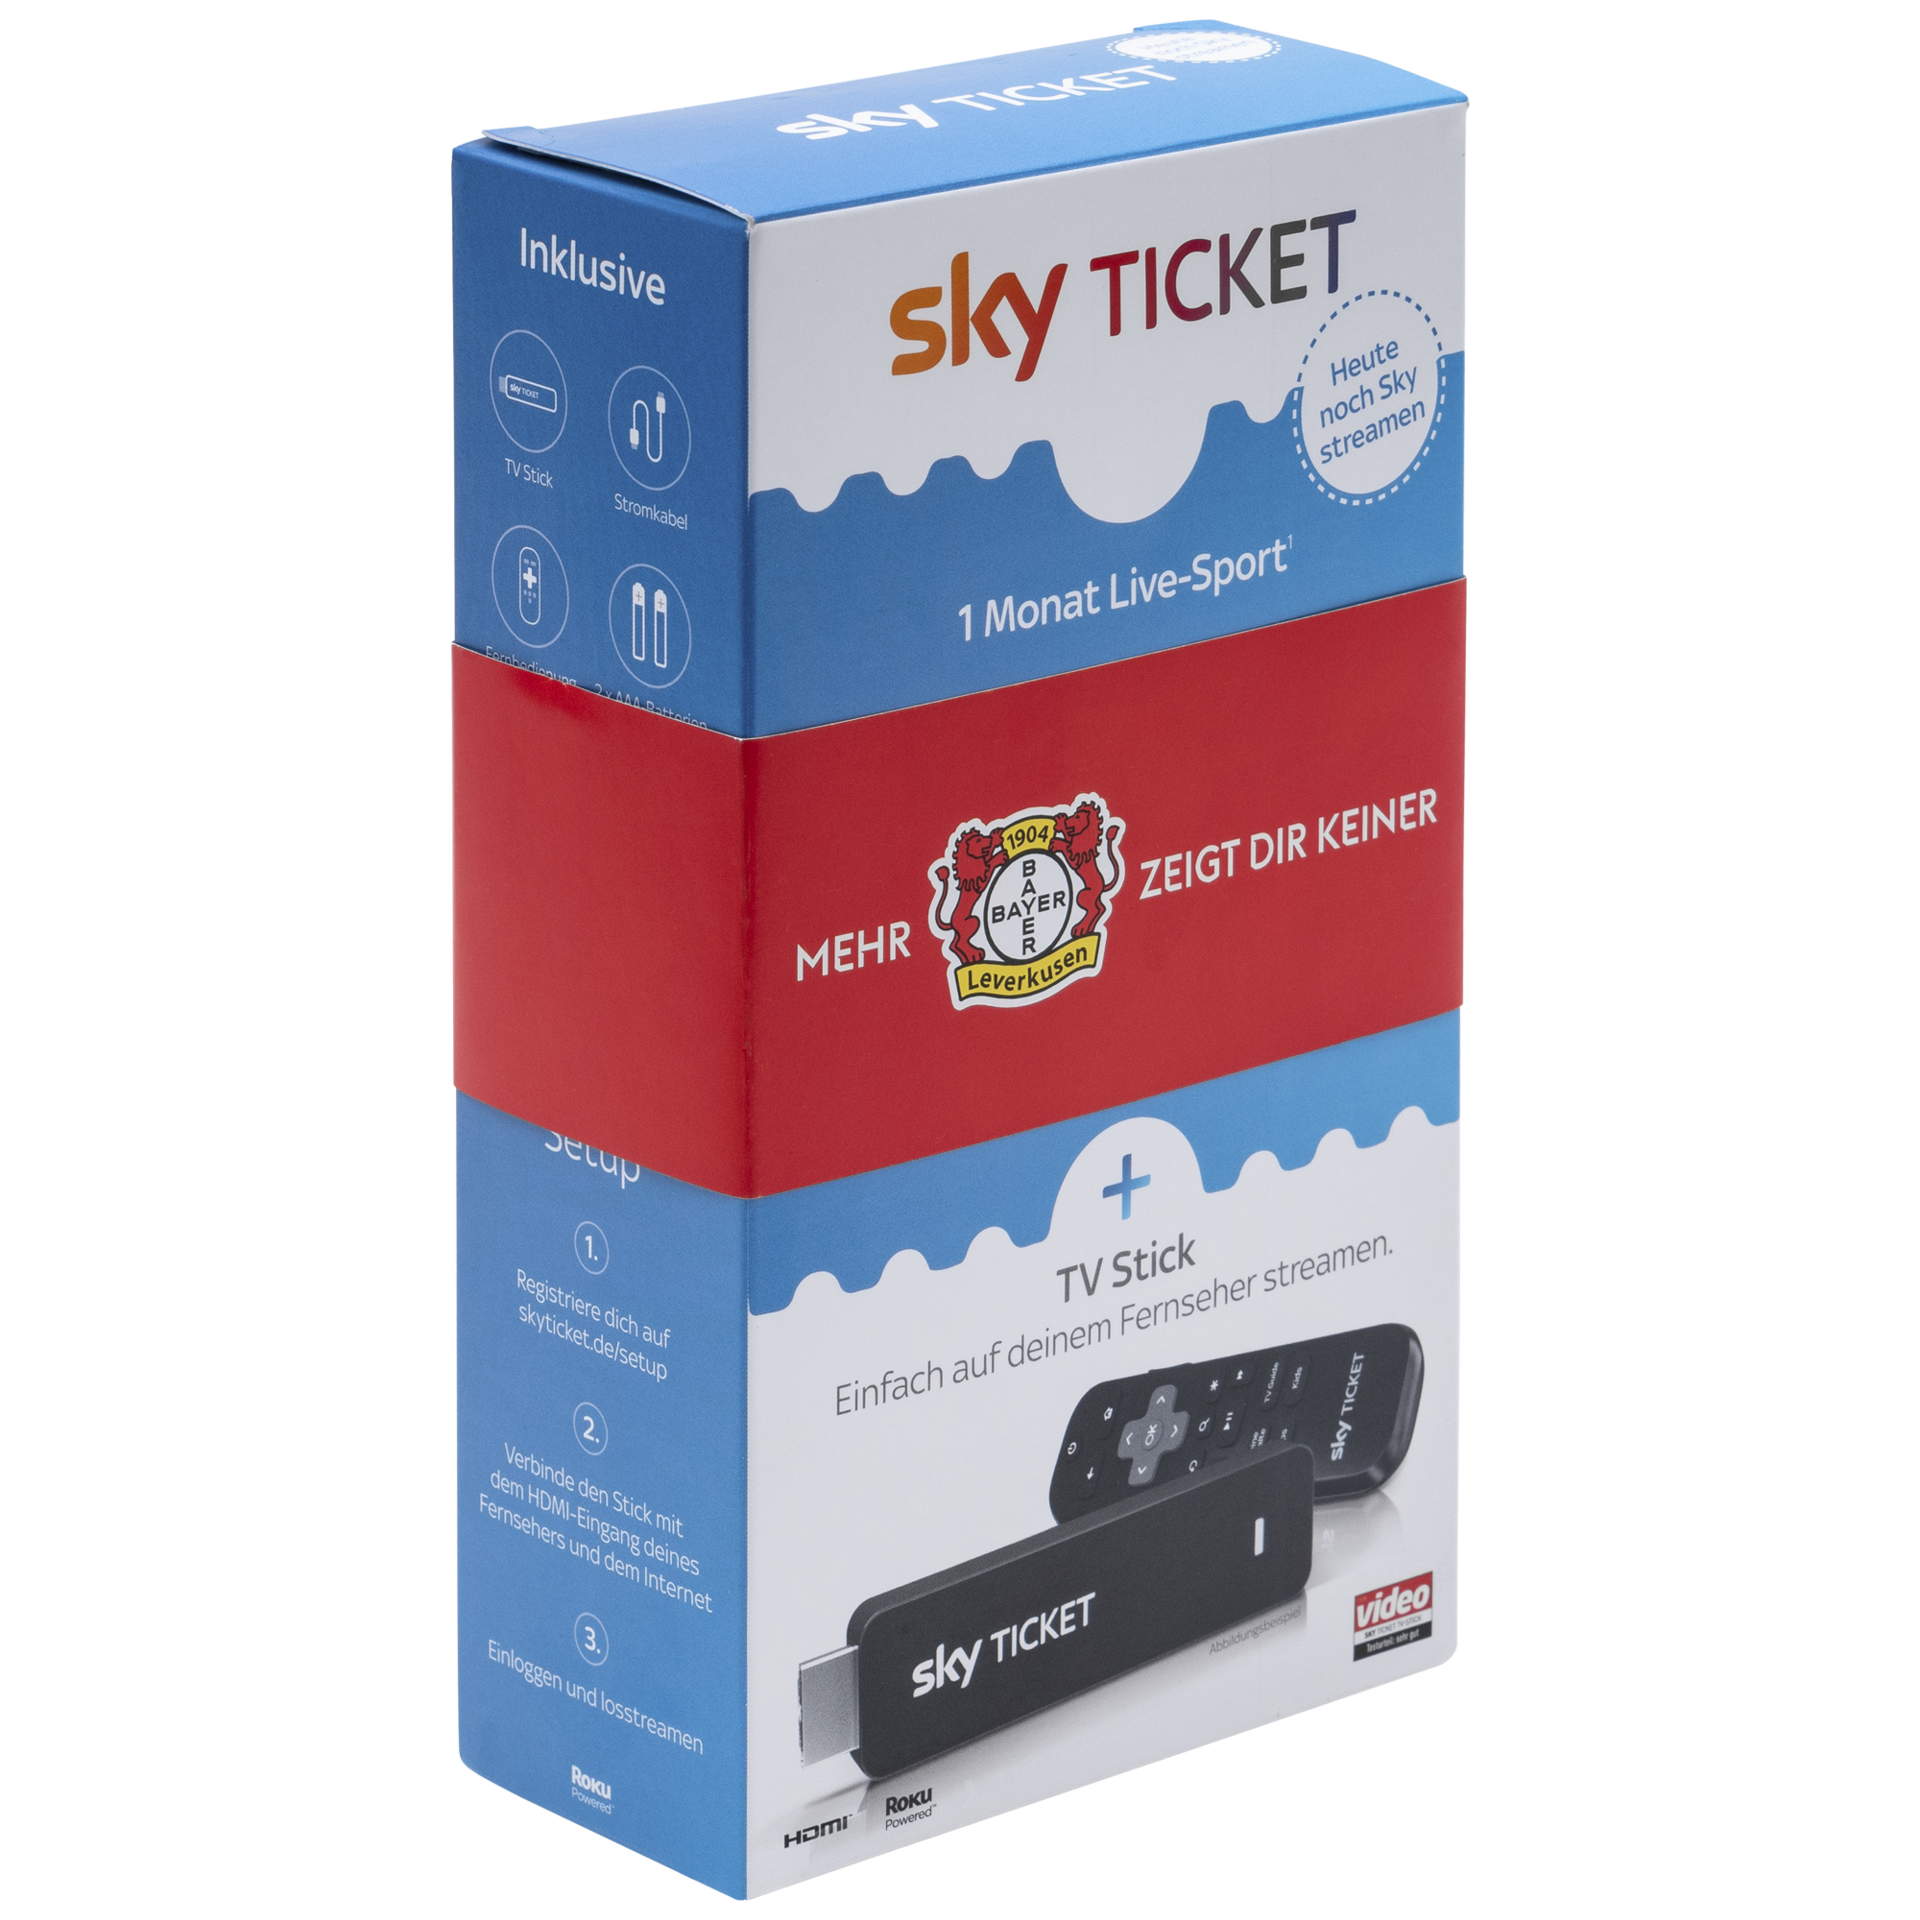 Sky ticket. Ticket Box. Sky Stick.